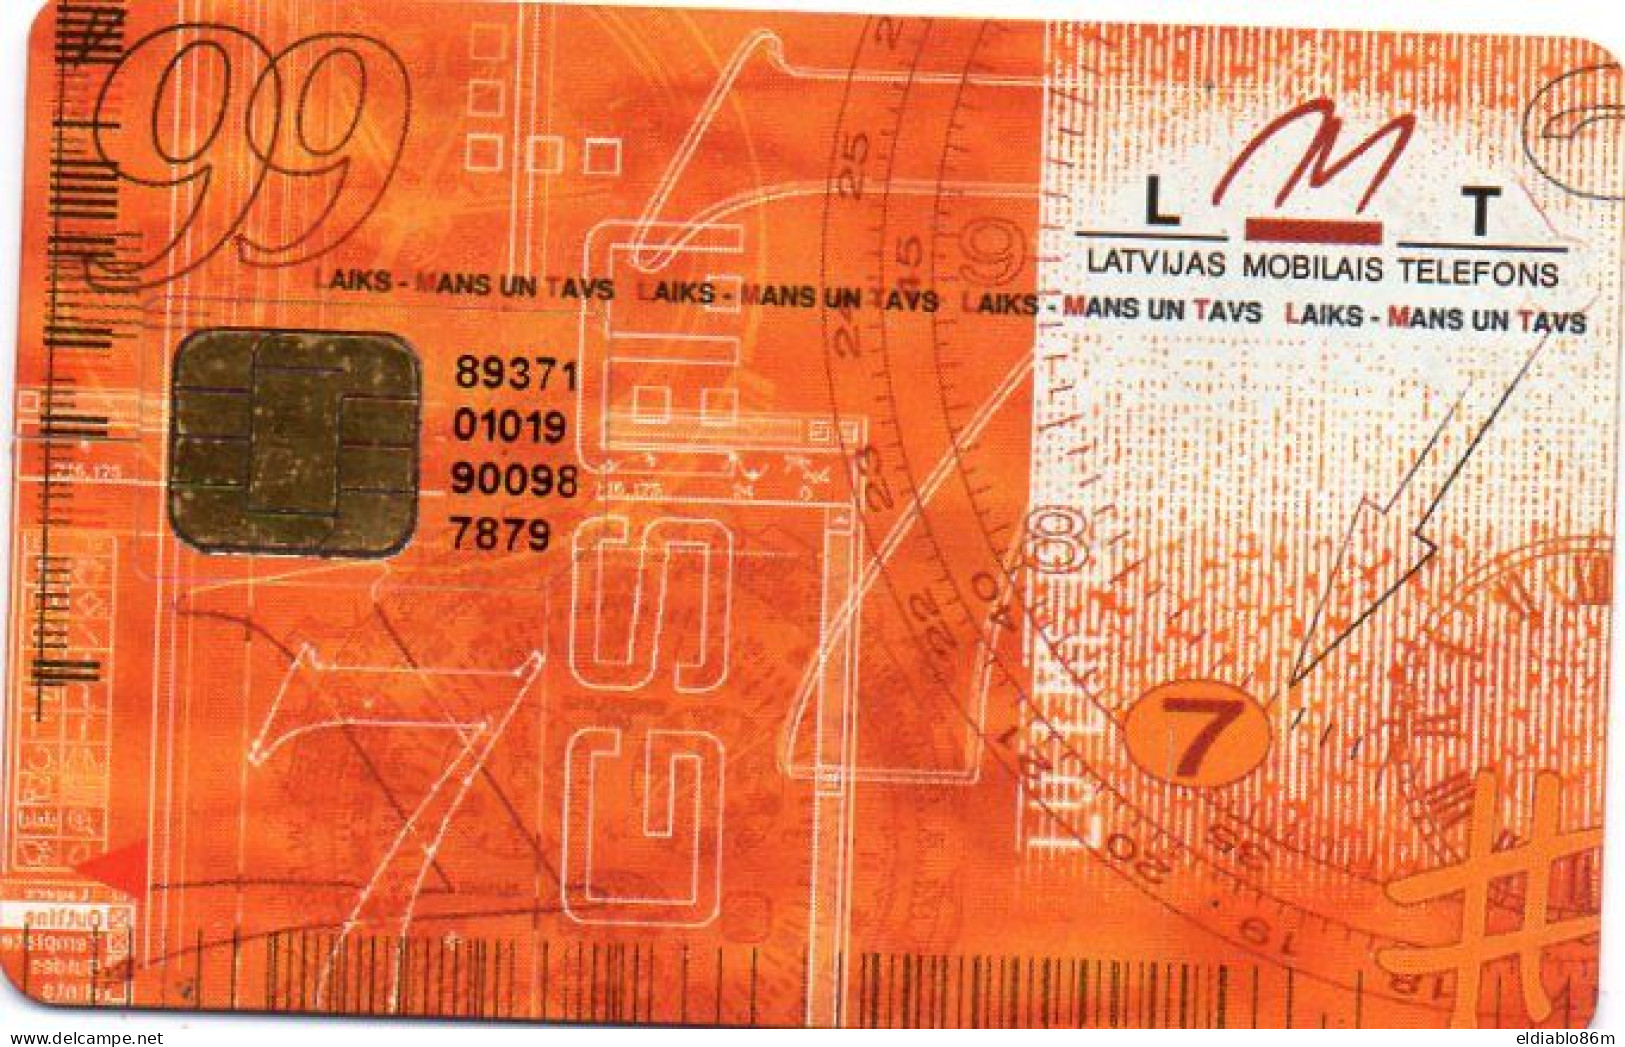 LATVIA - GSM CARD - LMT TATVIJAS MOBILAIS TELEFONS - GSM ORANGE 99 - USED WITH CHIP - Latvia